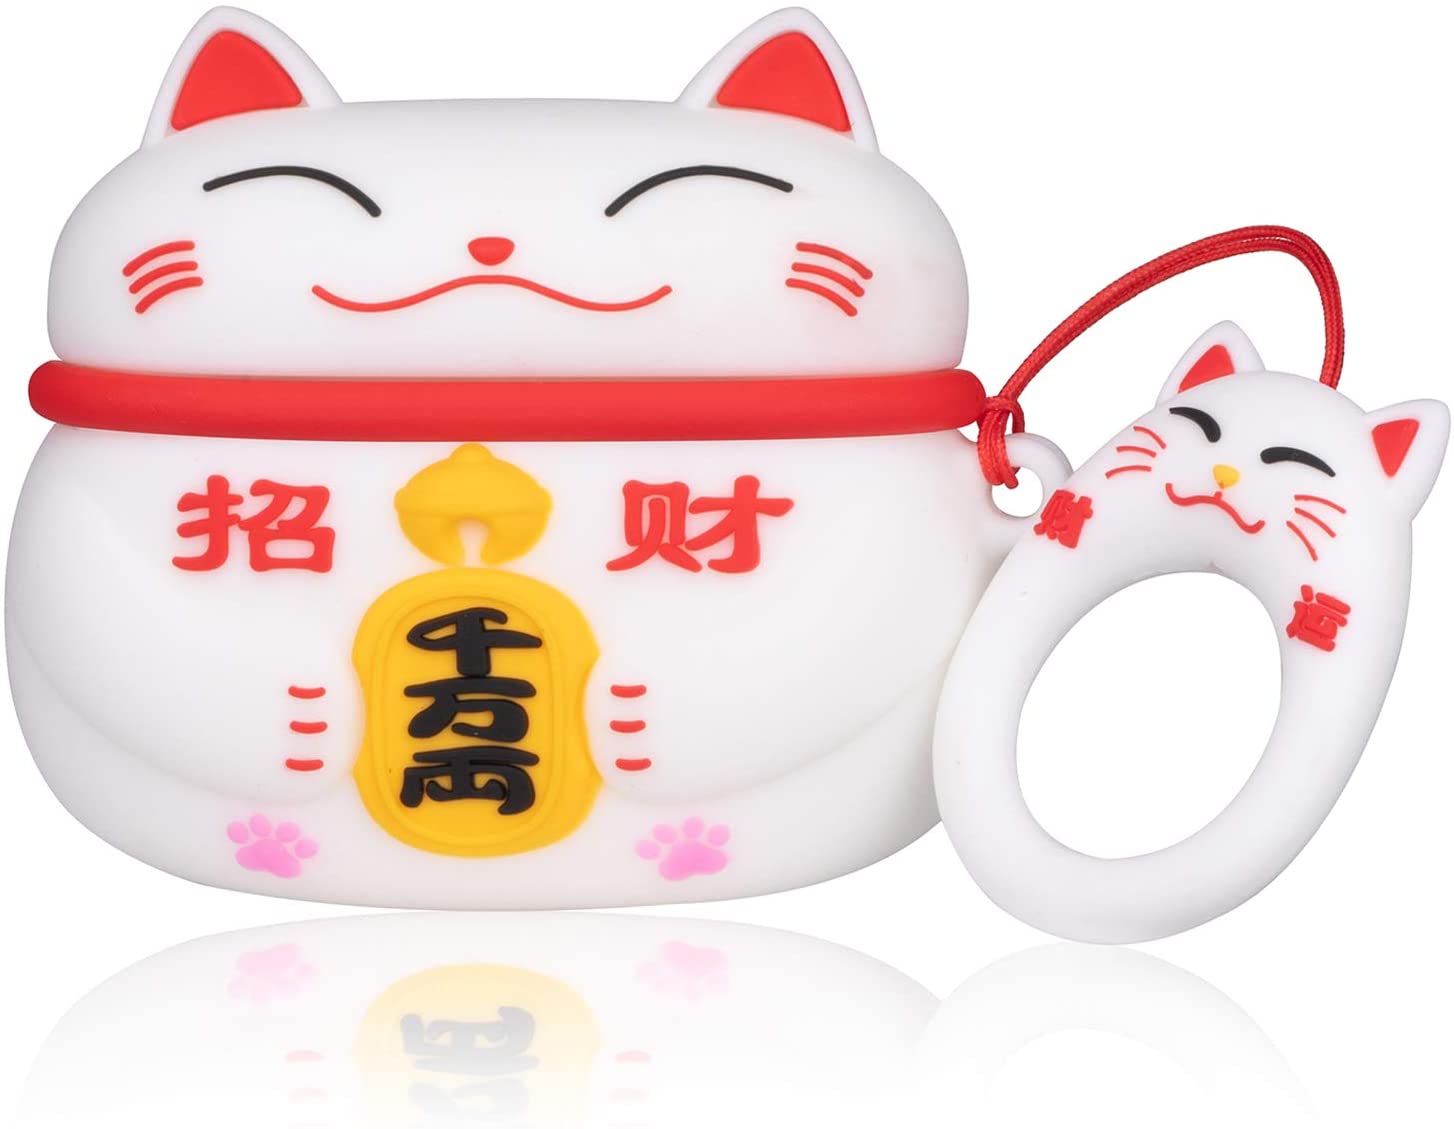 White Maneki-neko Lucky Cat Airpods Case - 0